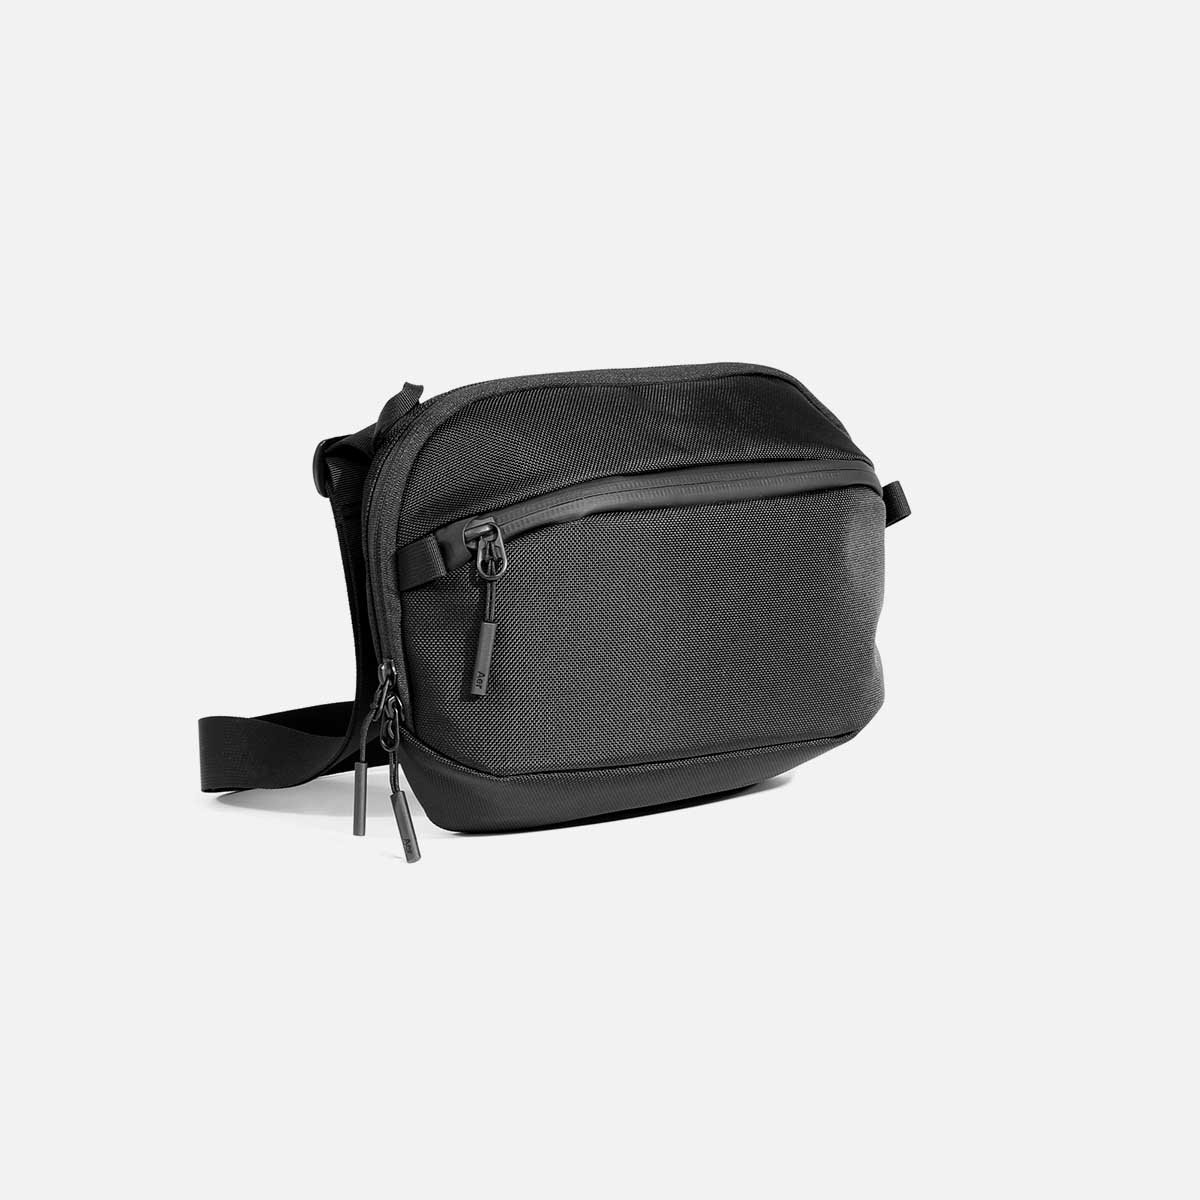 Day Sling 3 Max - Black — Aer | Modern gym bags, travel backpacks and laptop backpacks designed for city travel